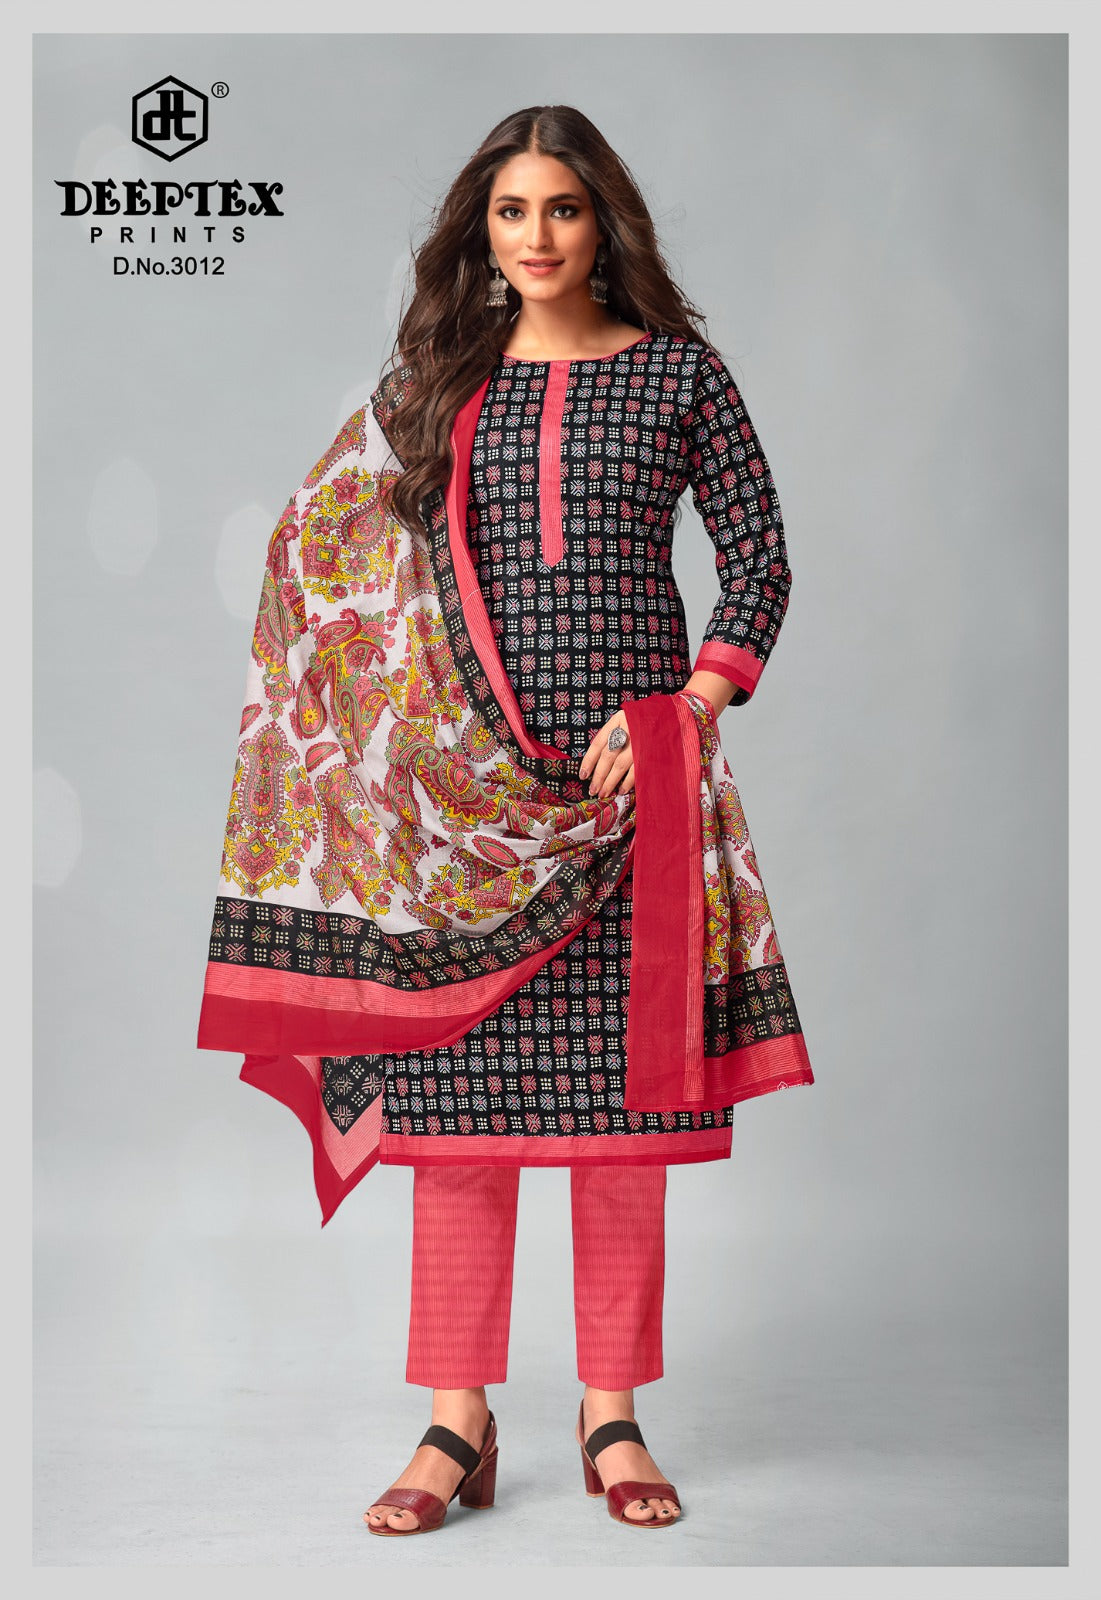 Deeptex printsss chief guest vol 30 cotton printed salwar suits wholesaler in jetpur - jilaniwholesalesuit